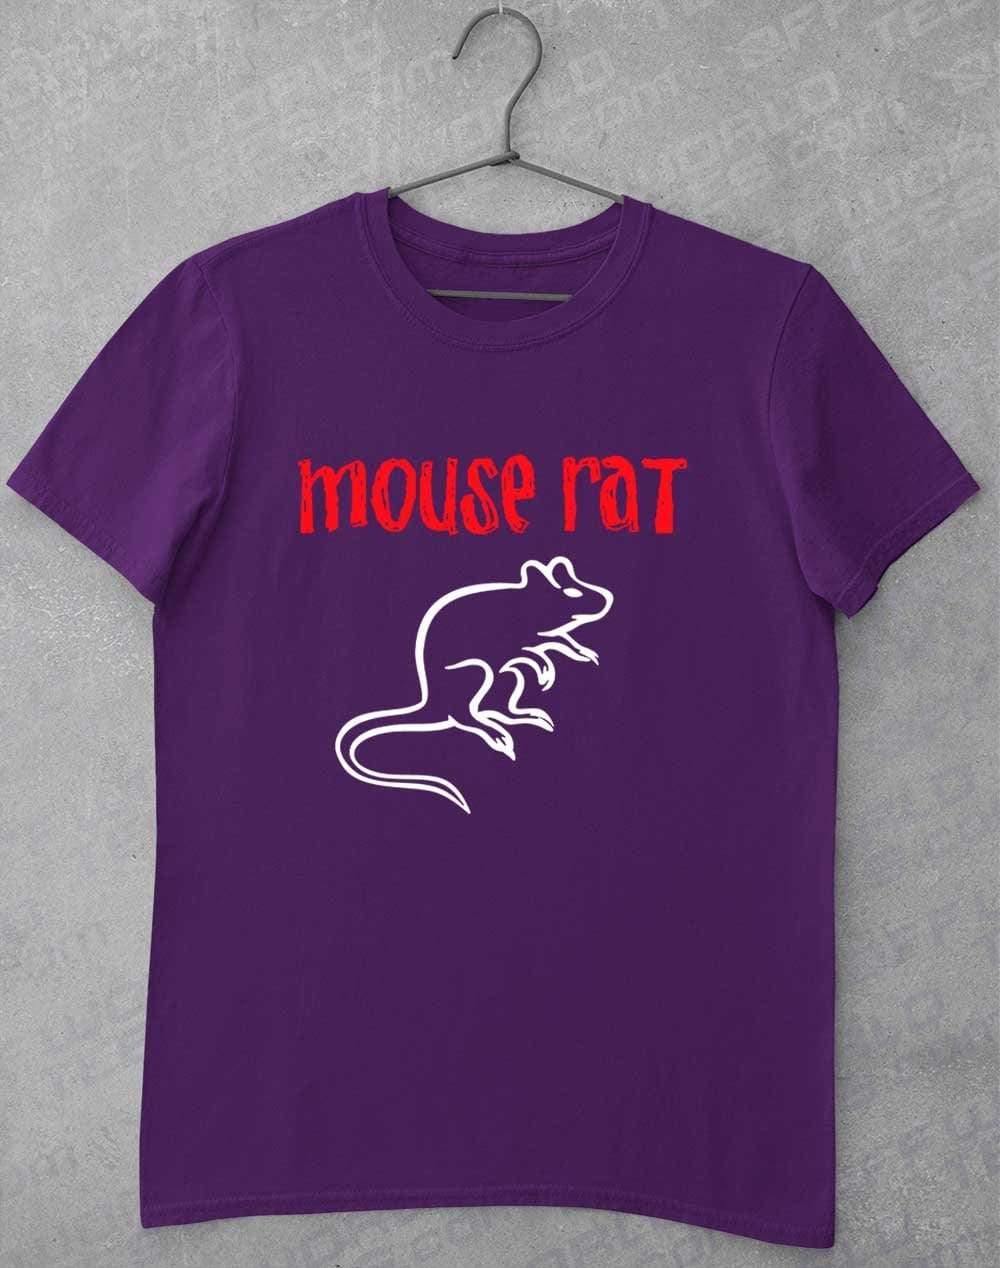 Mouse Rat Text Logo T-Shirt S / Purple  - Off World Tees